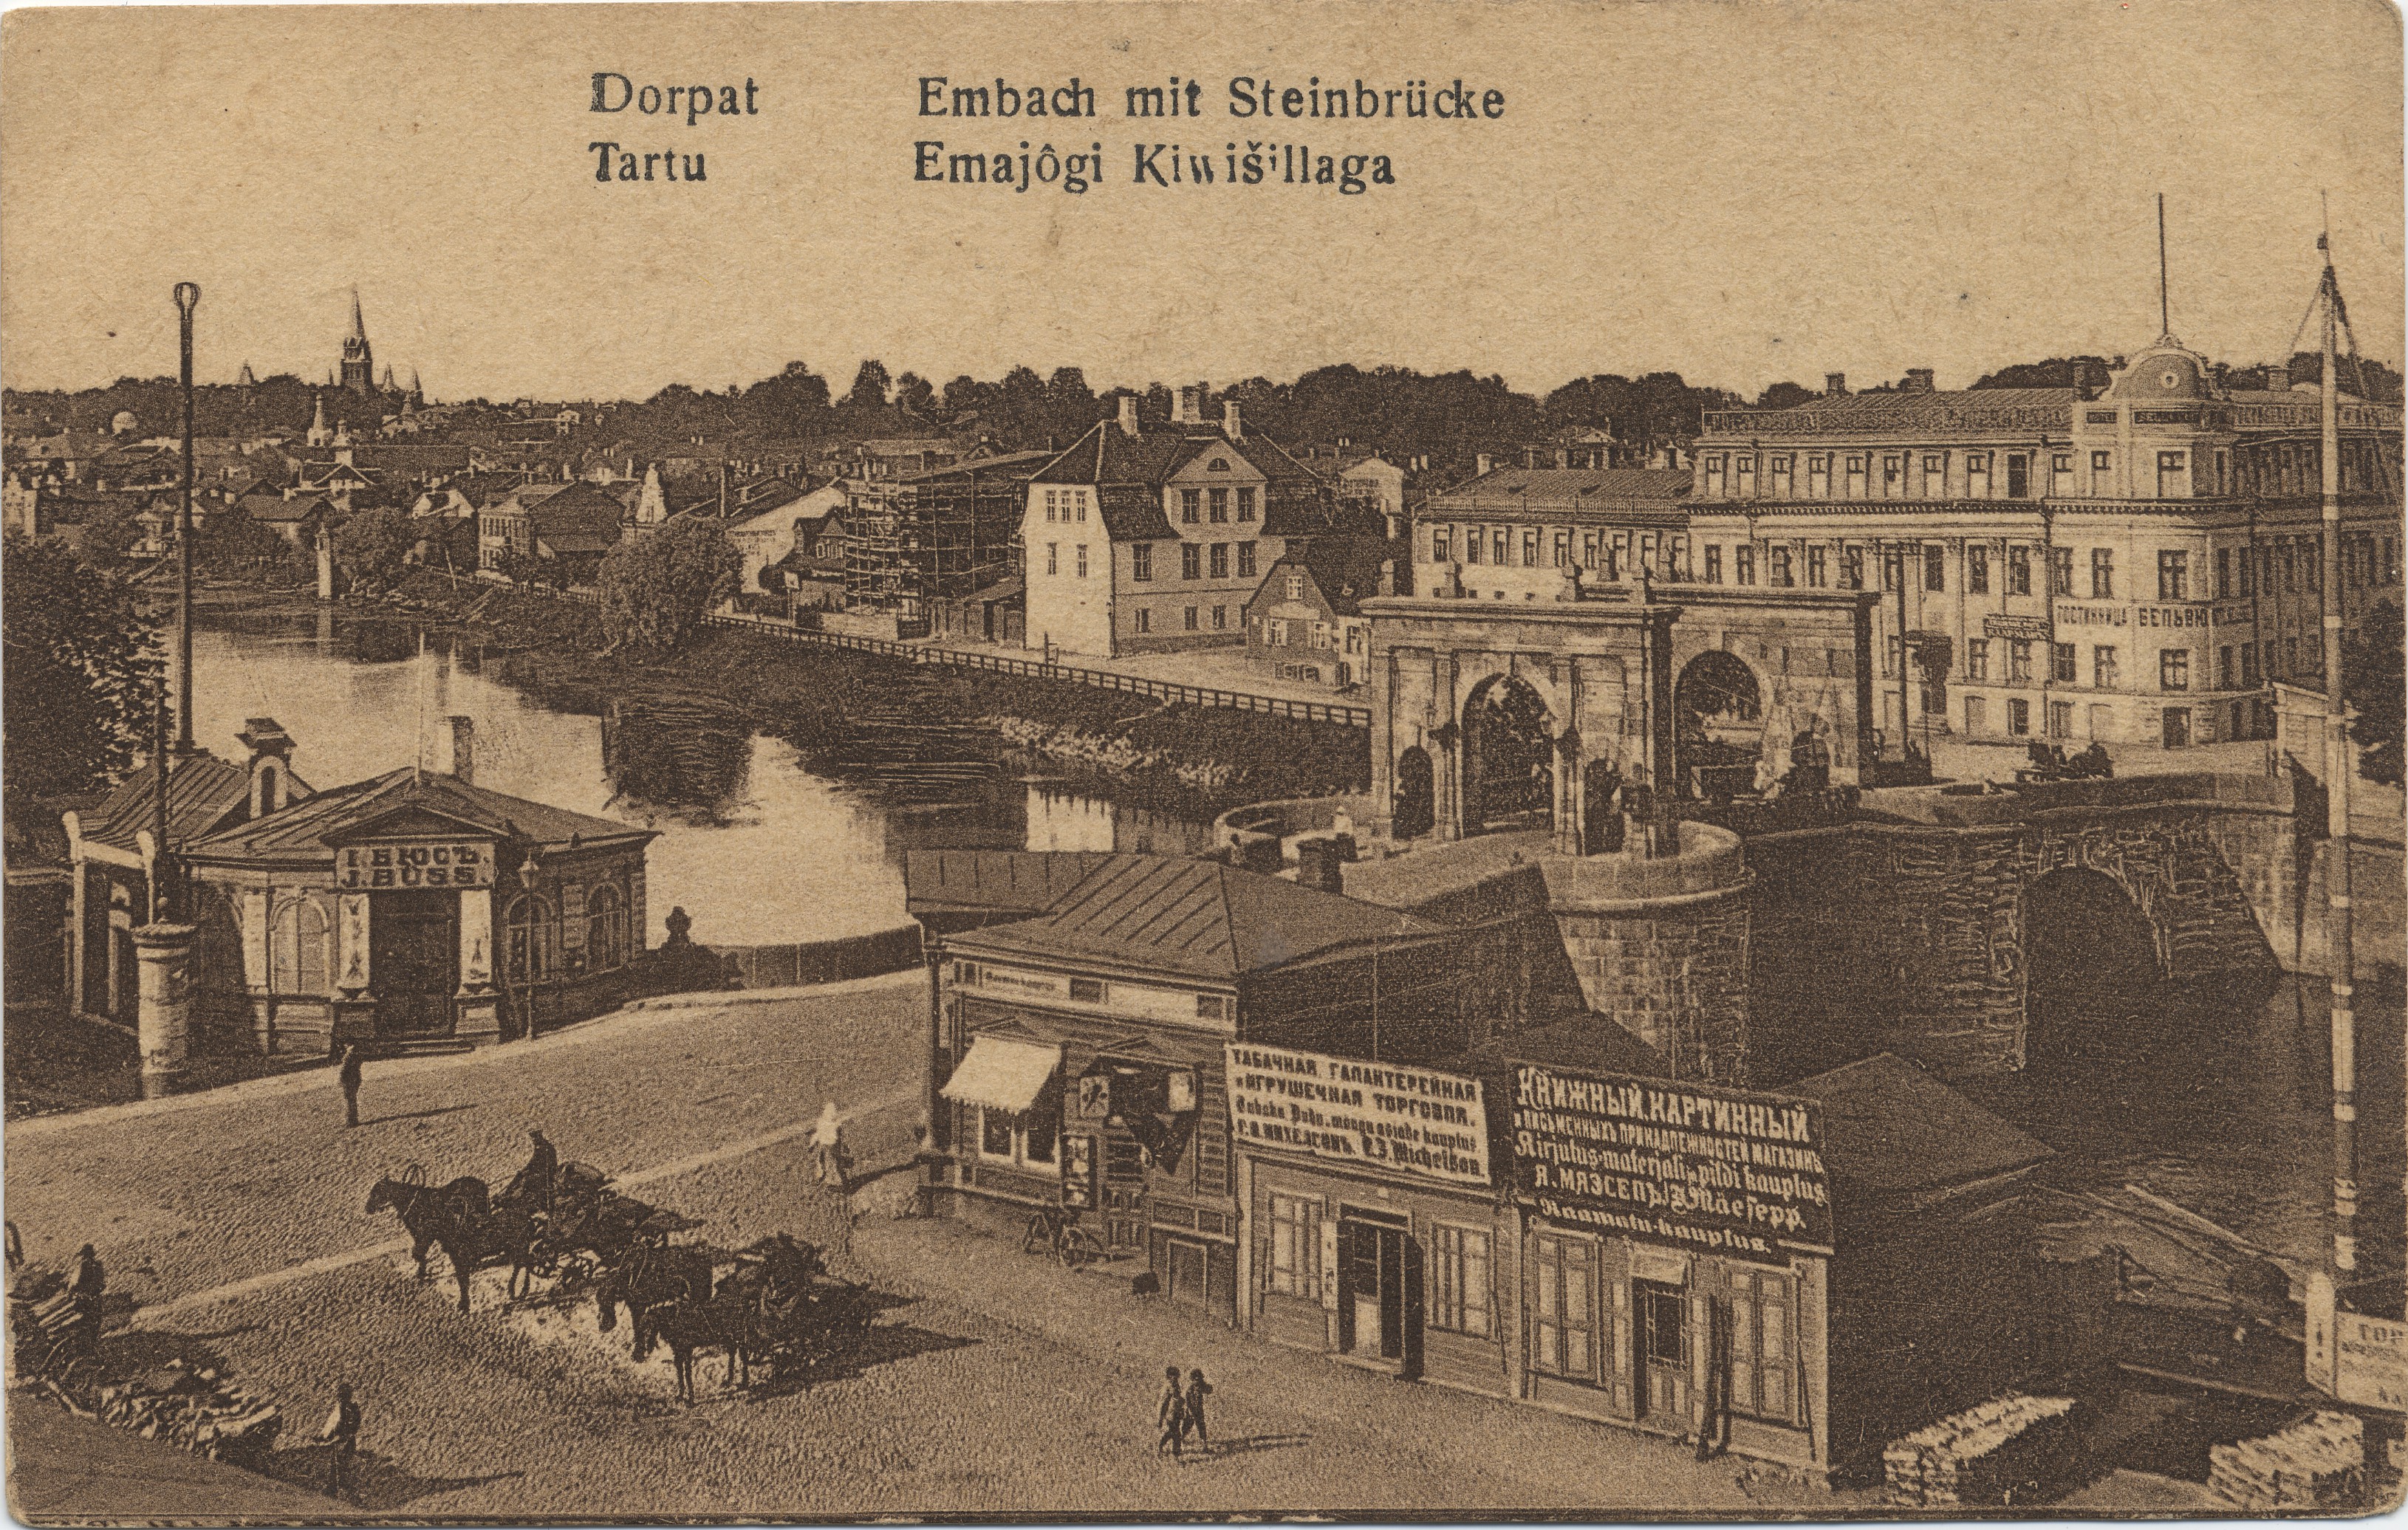 Dorpat : Embach with Steinbrücke = Tartu : Emajõgi Kiwillaga